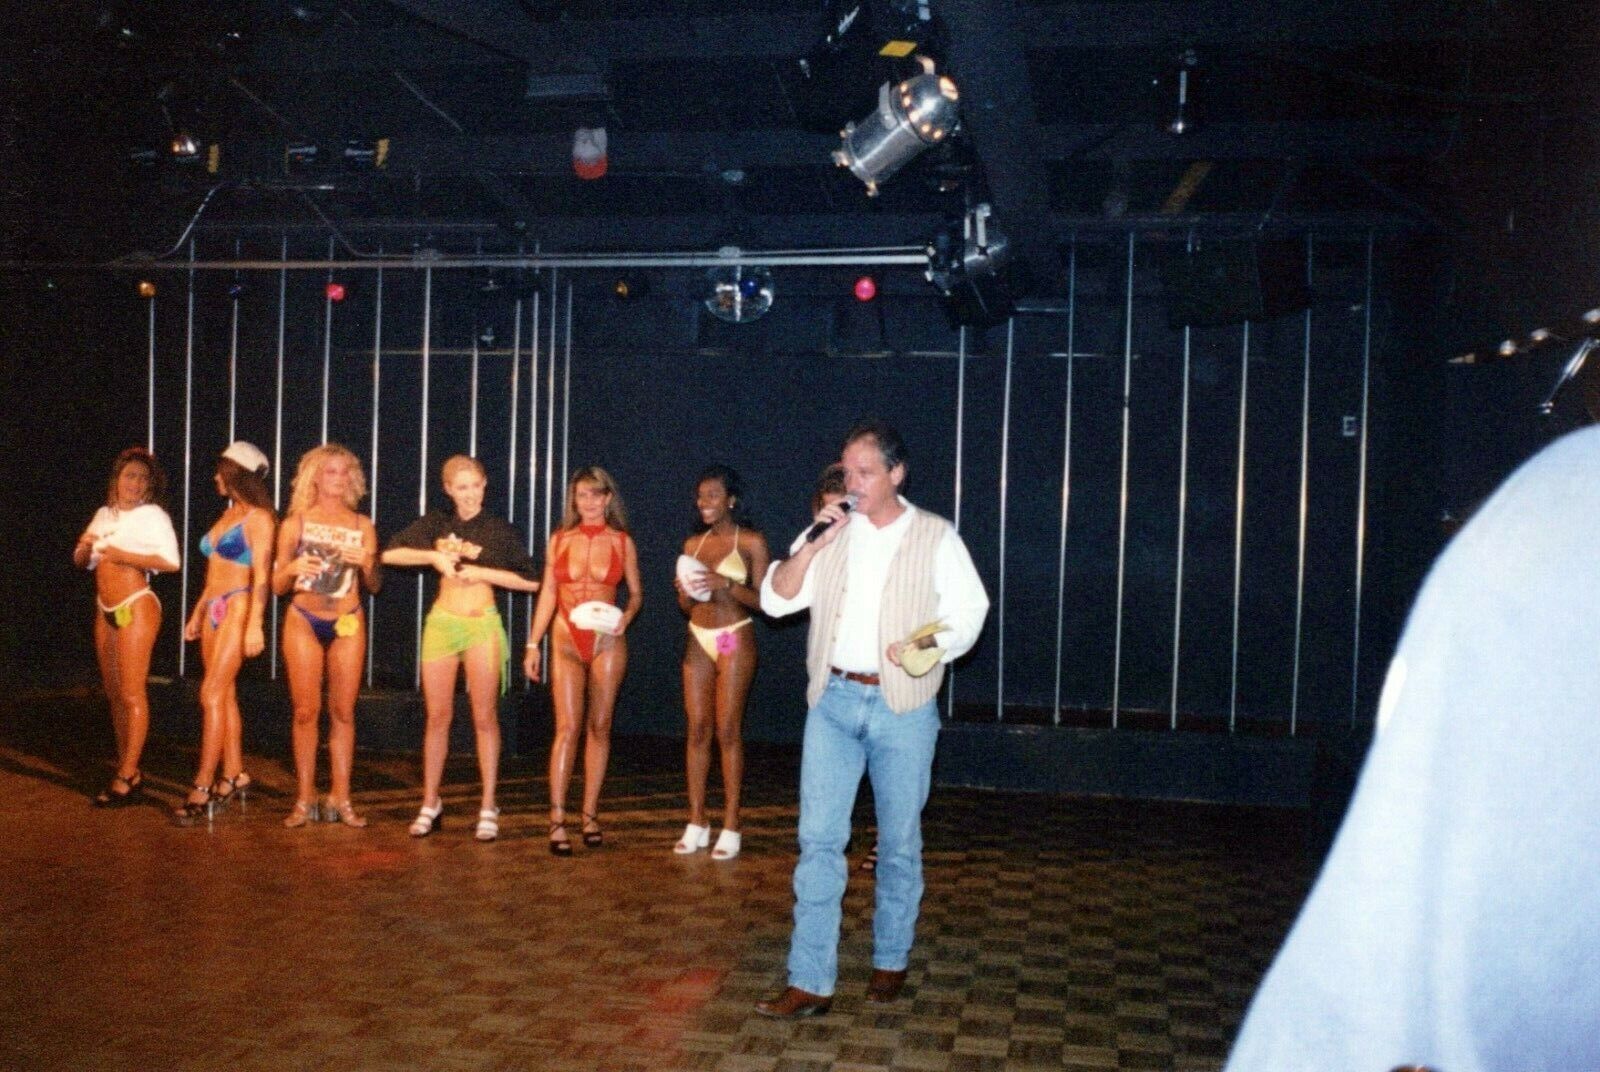 Vintage 1990s Found Photo - Sexy Bikini Models Wait On Stage While Judges Score